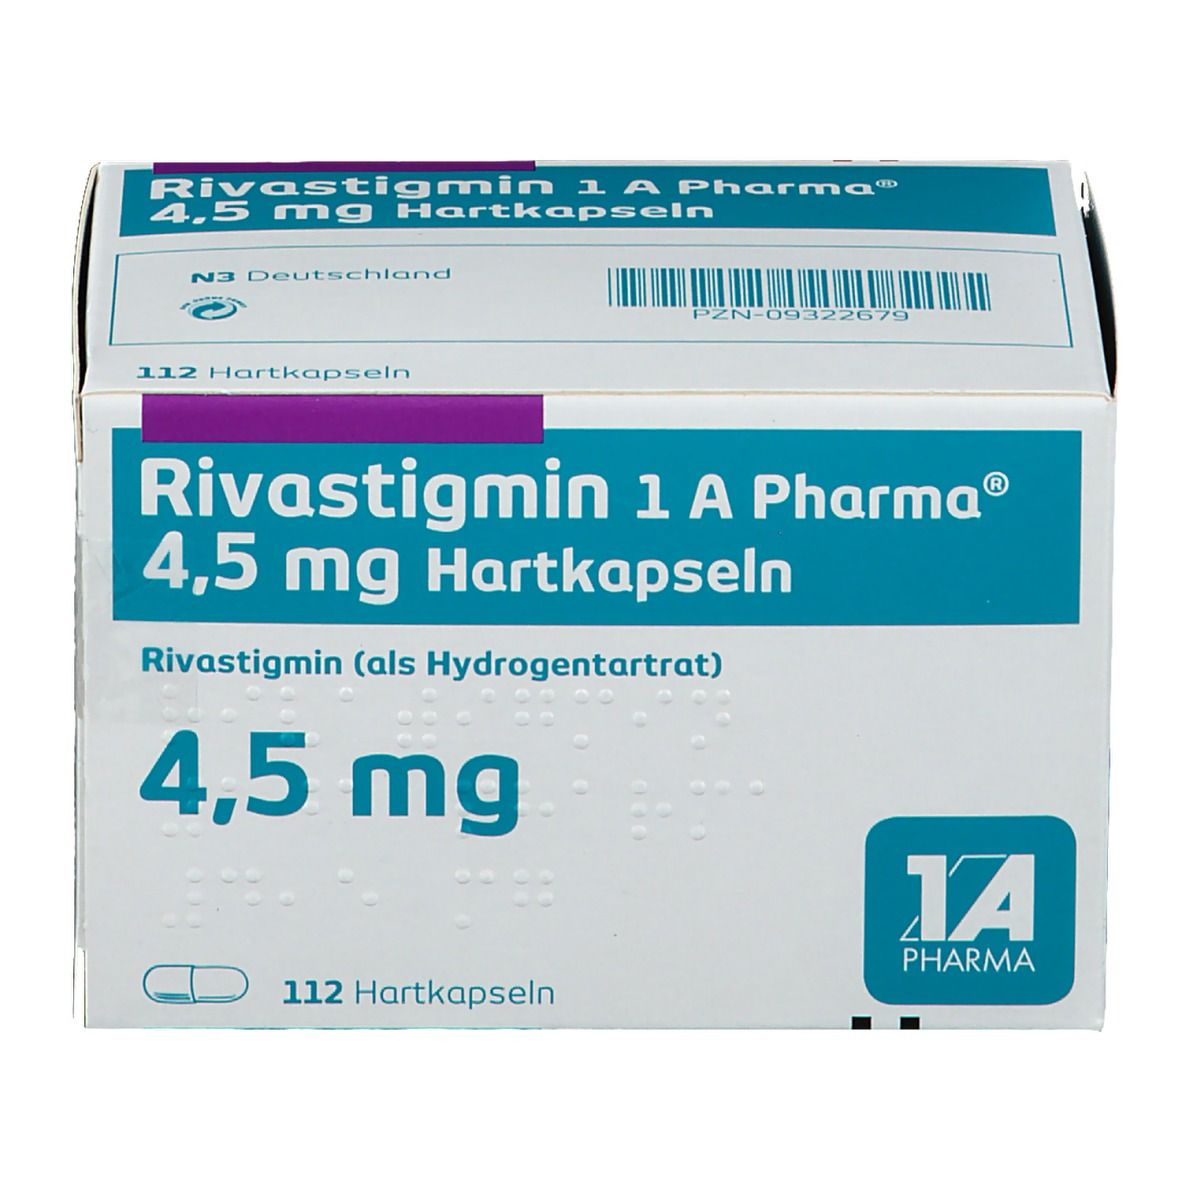 Rivastigmin 1A Ph4.5Mg Har